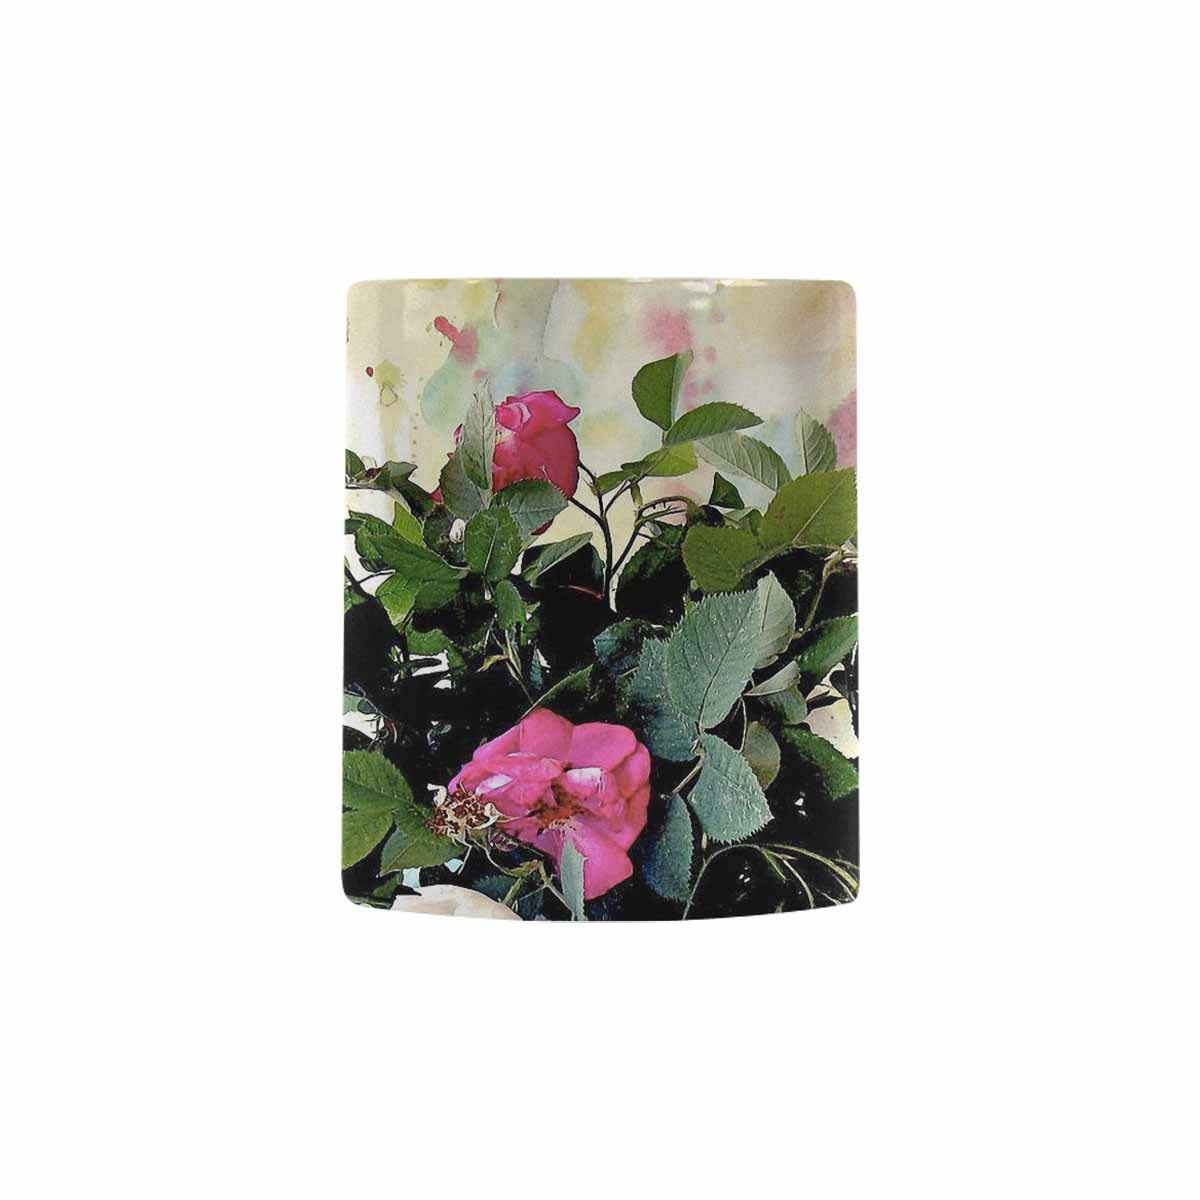 Vintage floral coffee mug or tea cup, Design 22